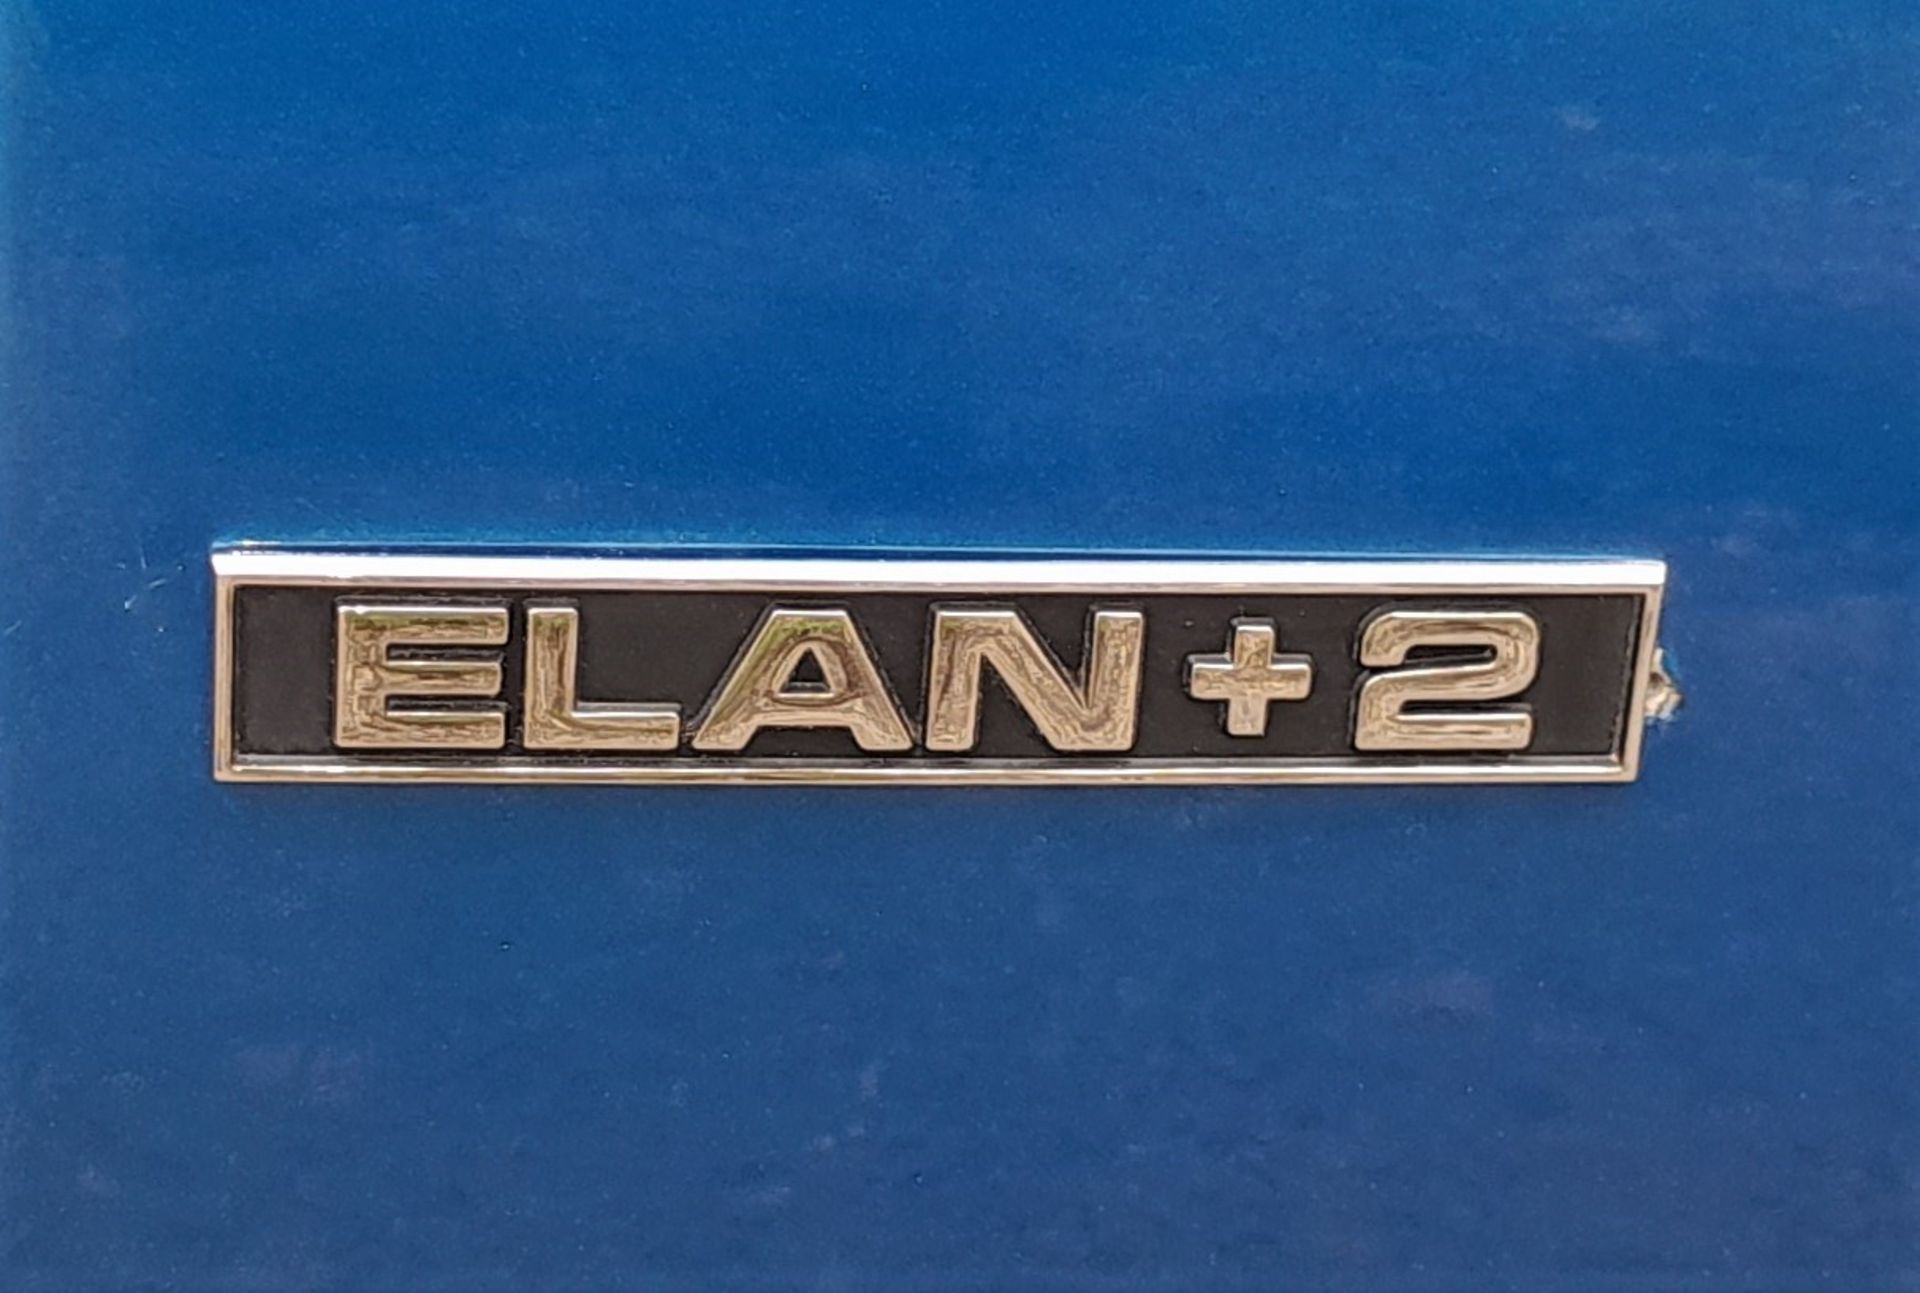 1972 LOTUS ELAN +2 130 Registration Number: ACA 450L Chassis Number: 720808452 Recorded Mileage: c. - Image 15 of 15